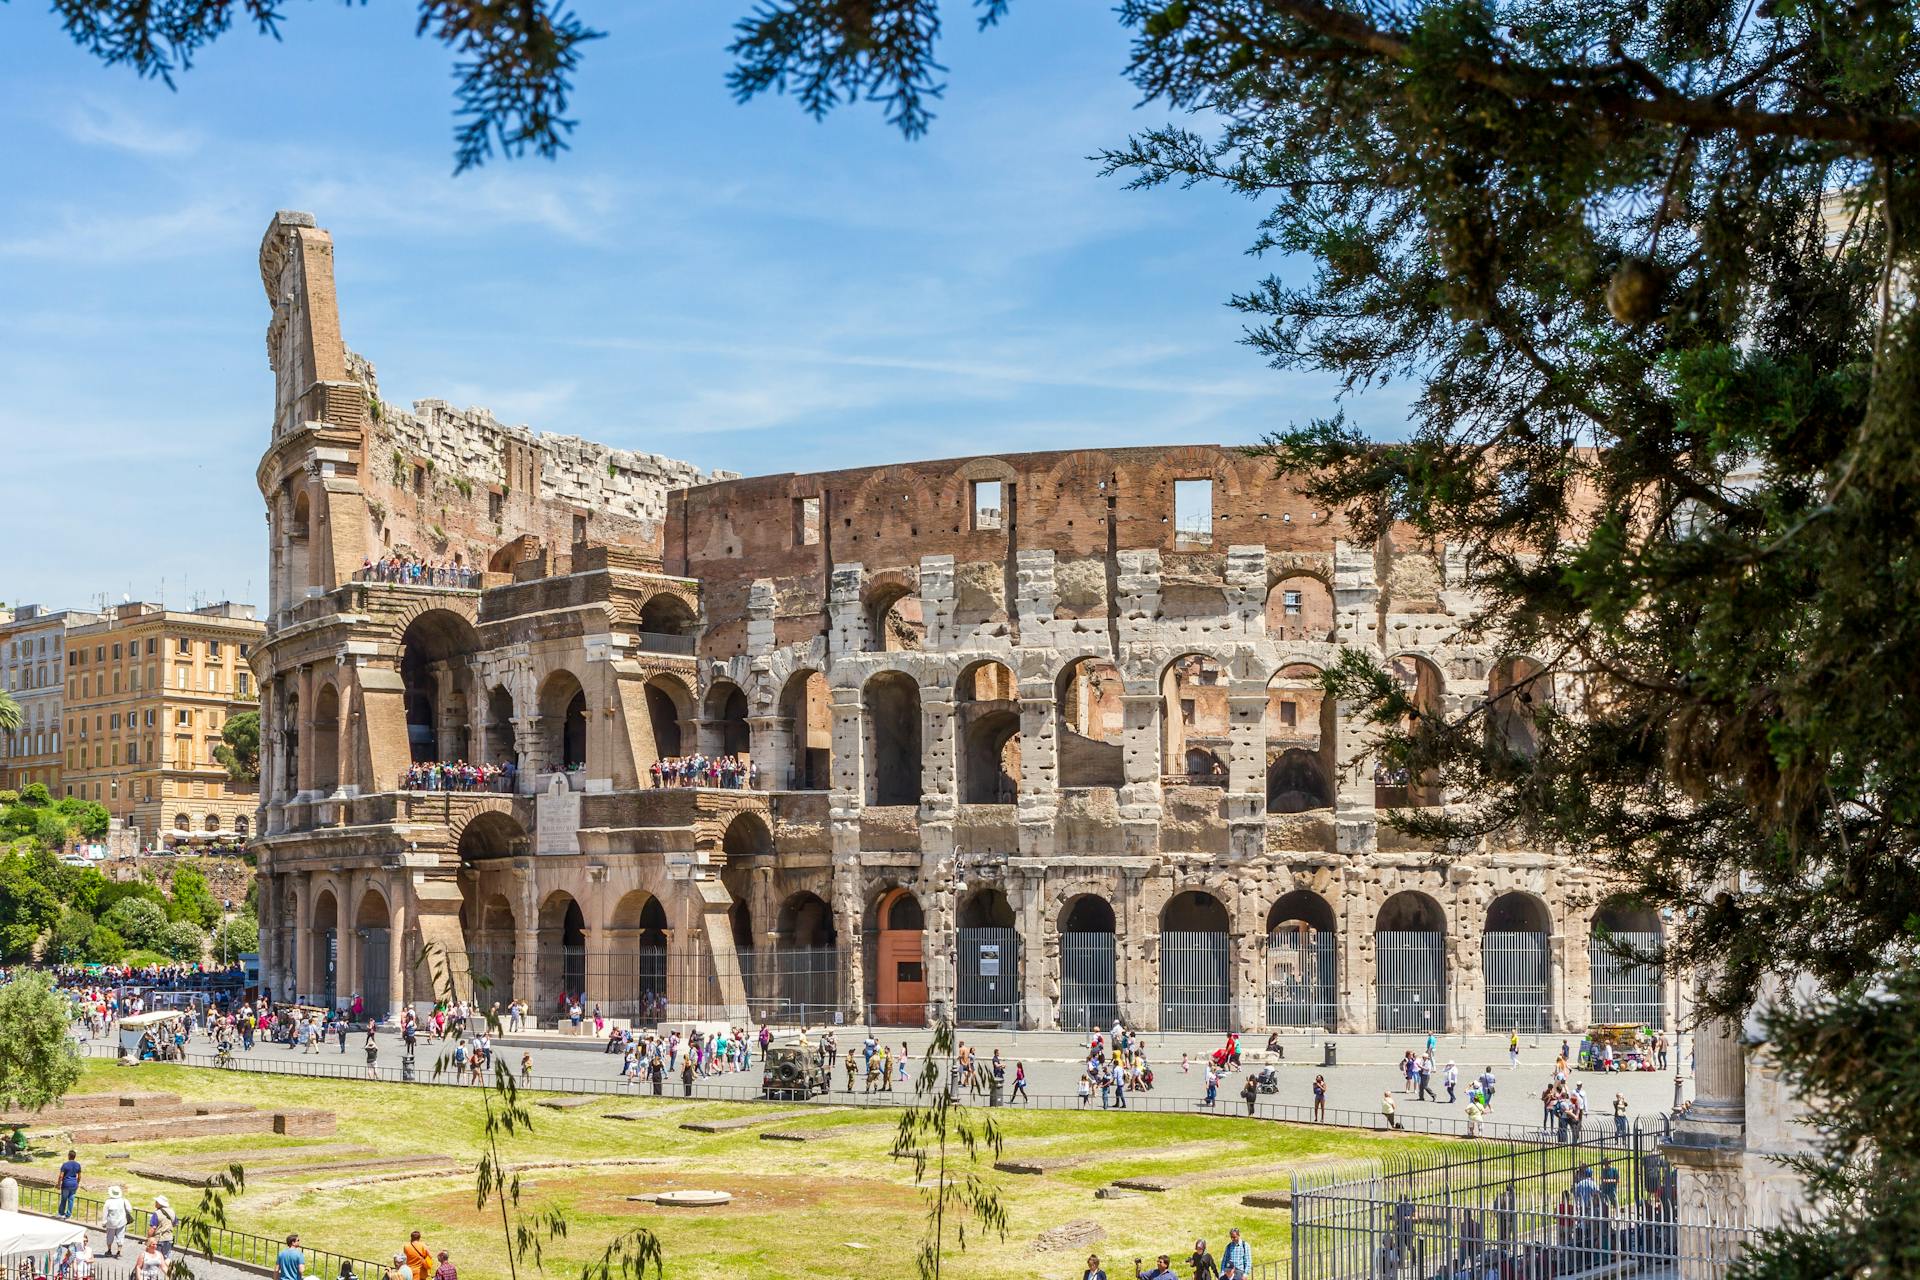 Rome Italy Colosseum amphitheatre 